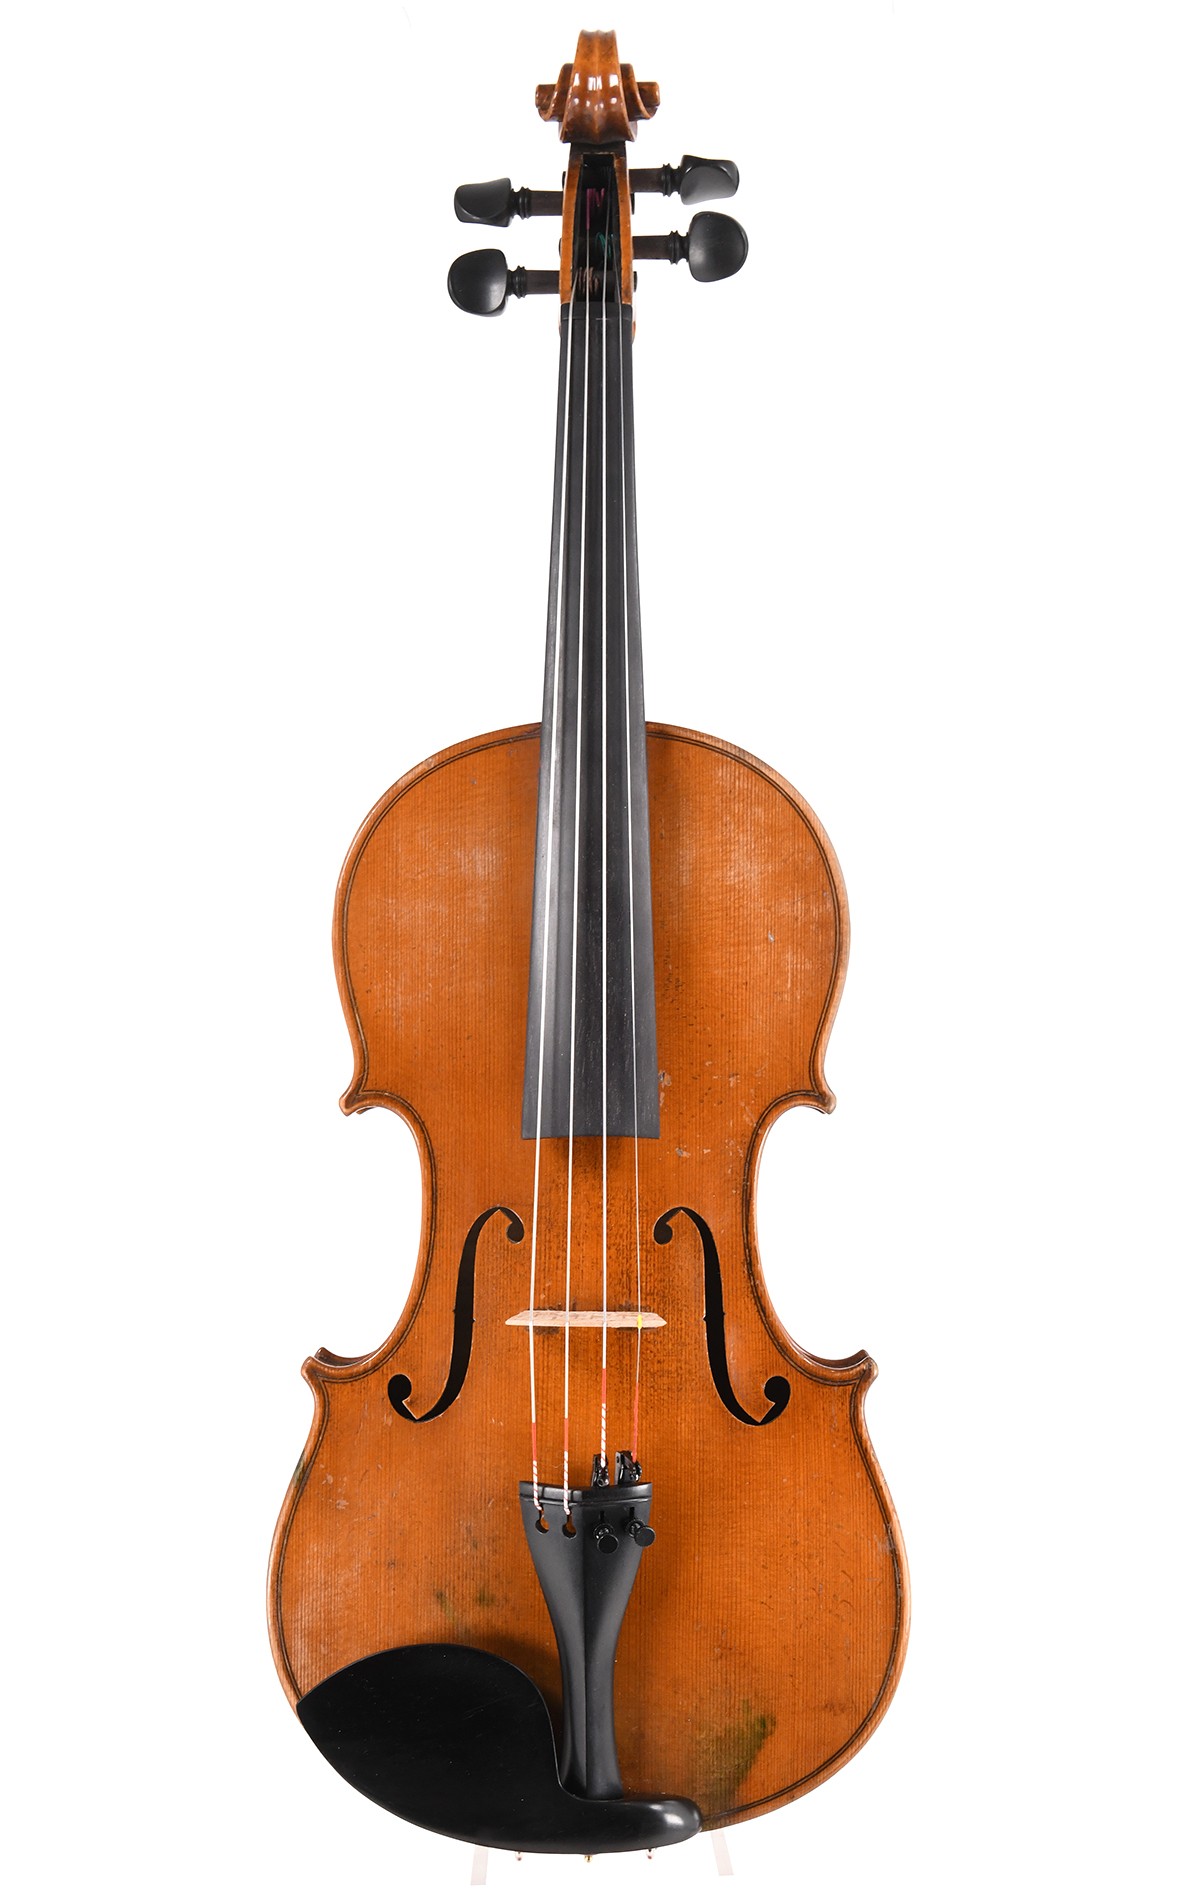 Exceptionnelle copie de Stradivarius allemande, vers 1880